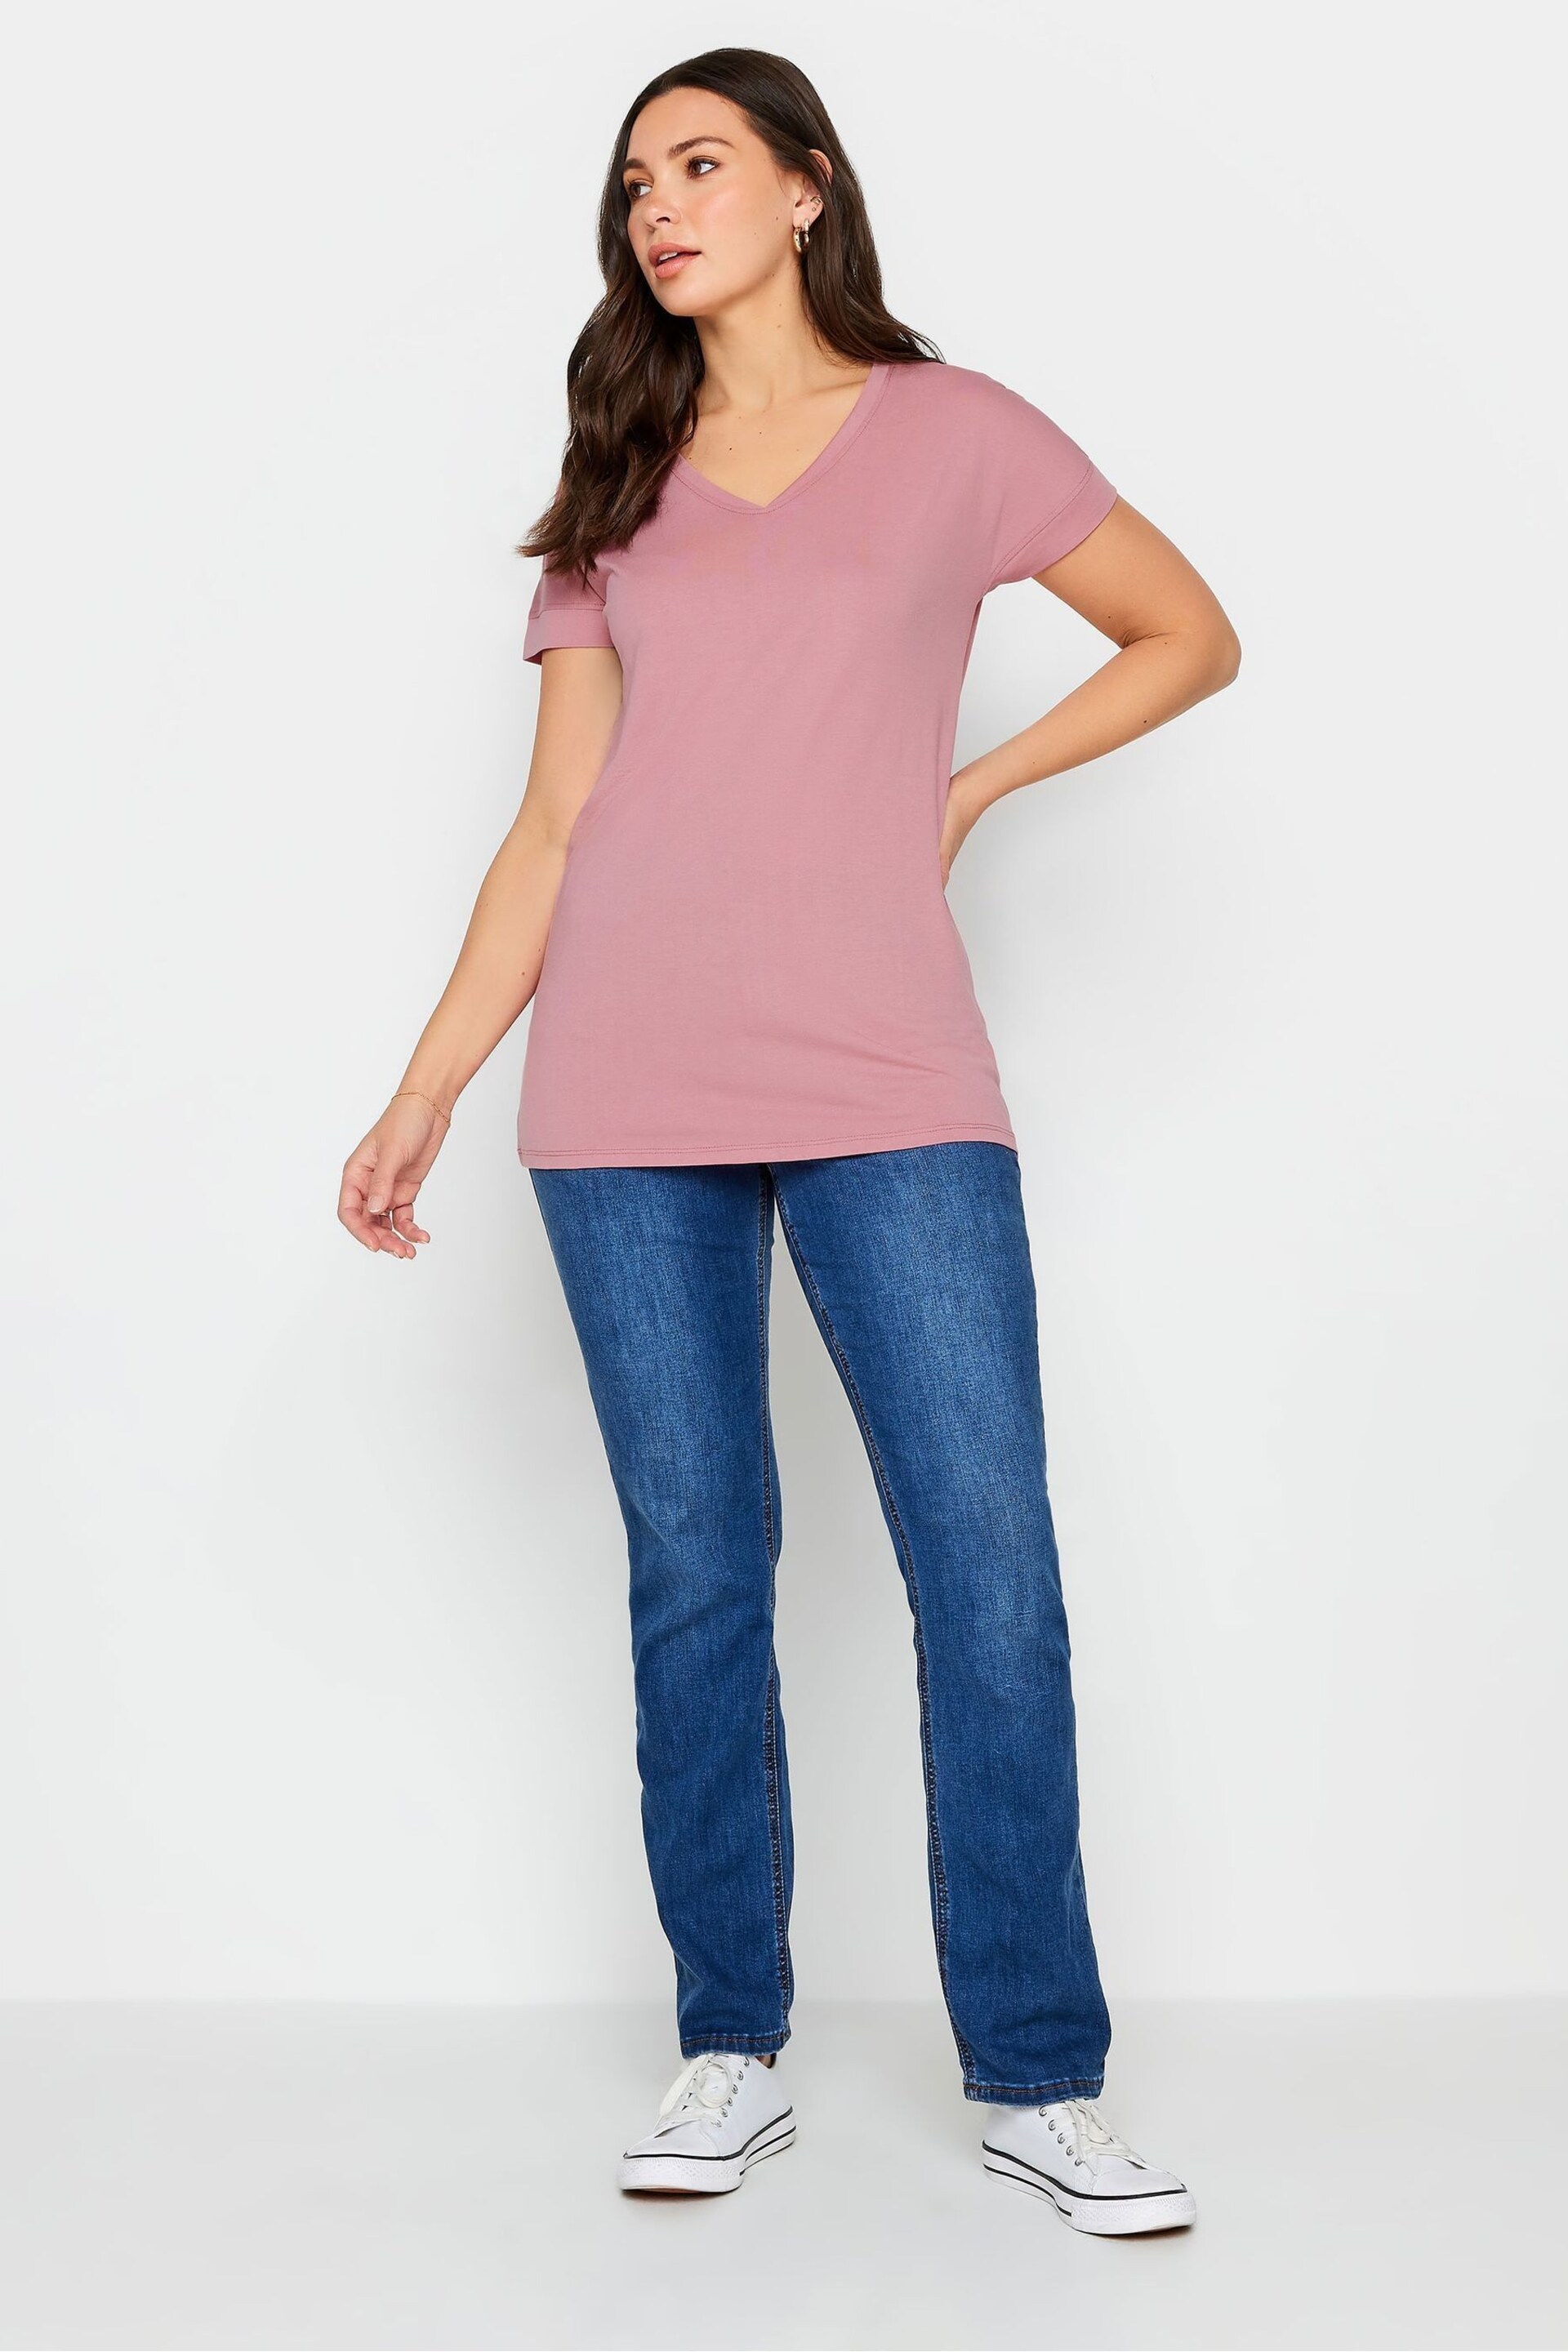 Long Tall Sally Pink PREMIUM V-Neck T-Shirt - Image 3 of 4